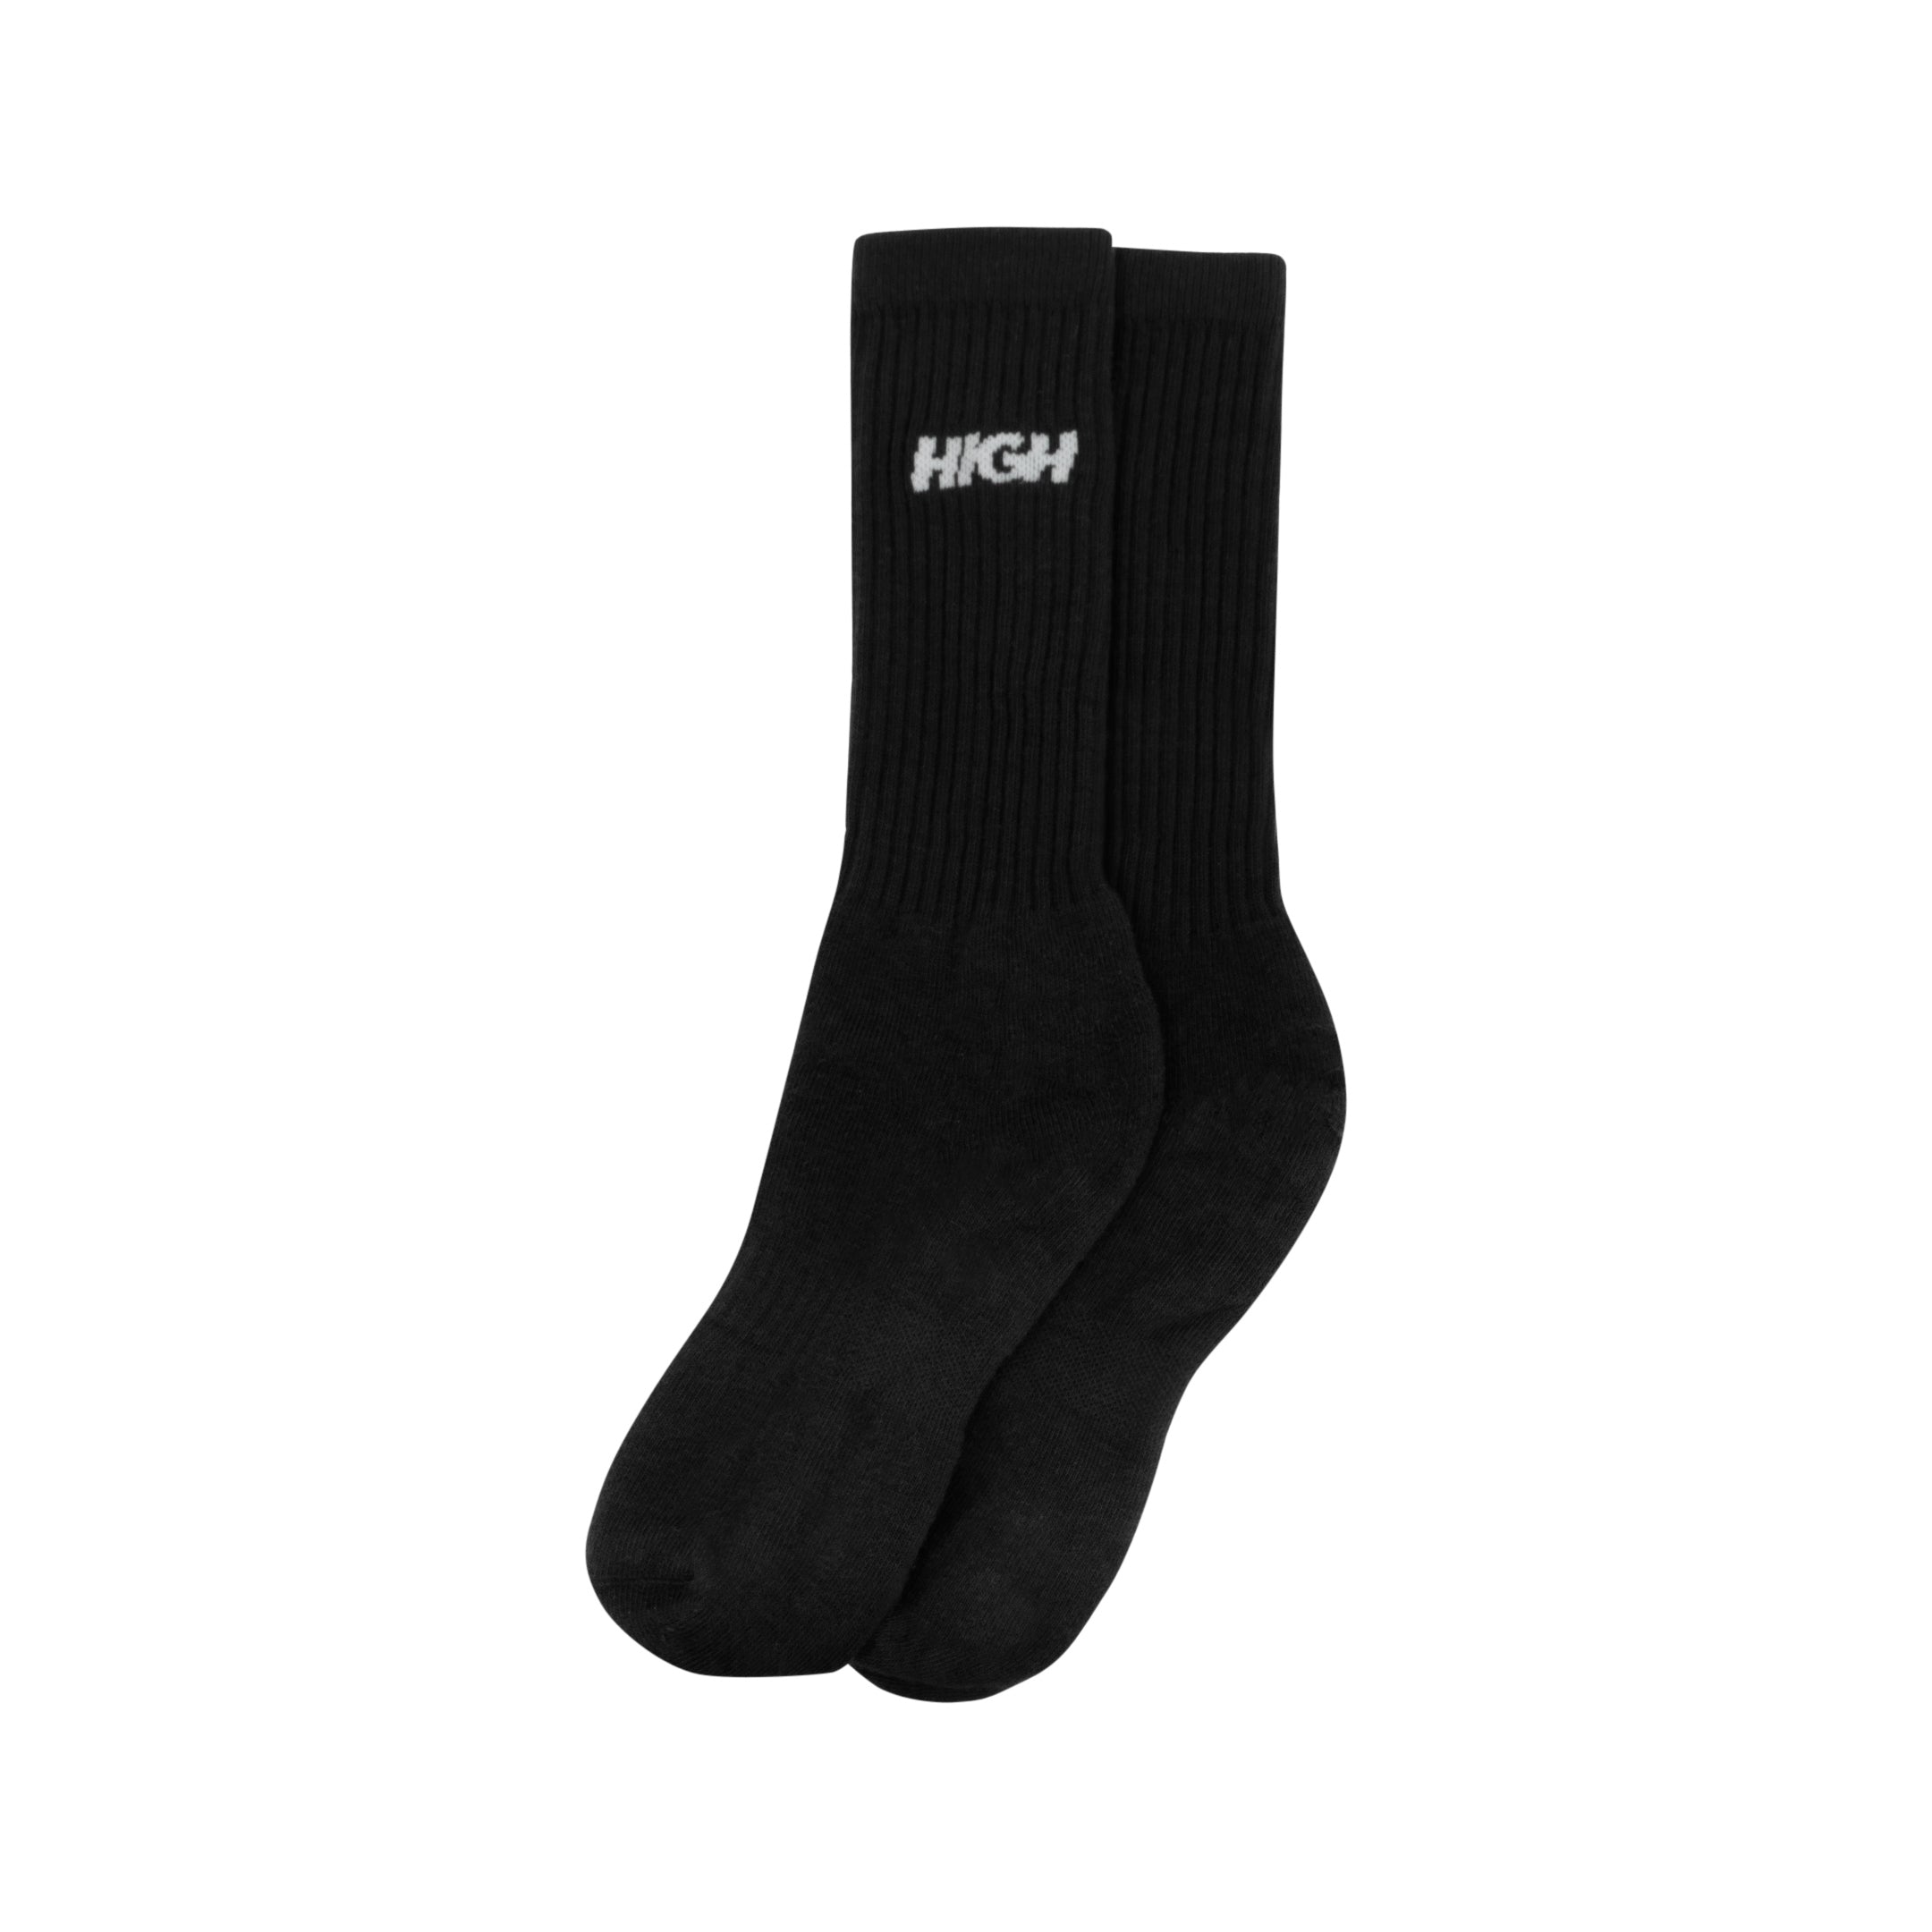 HIGH - Socks Logo Black